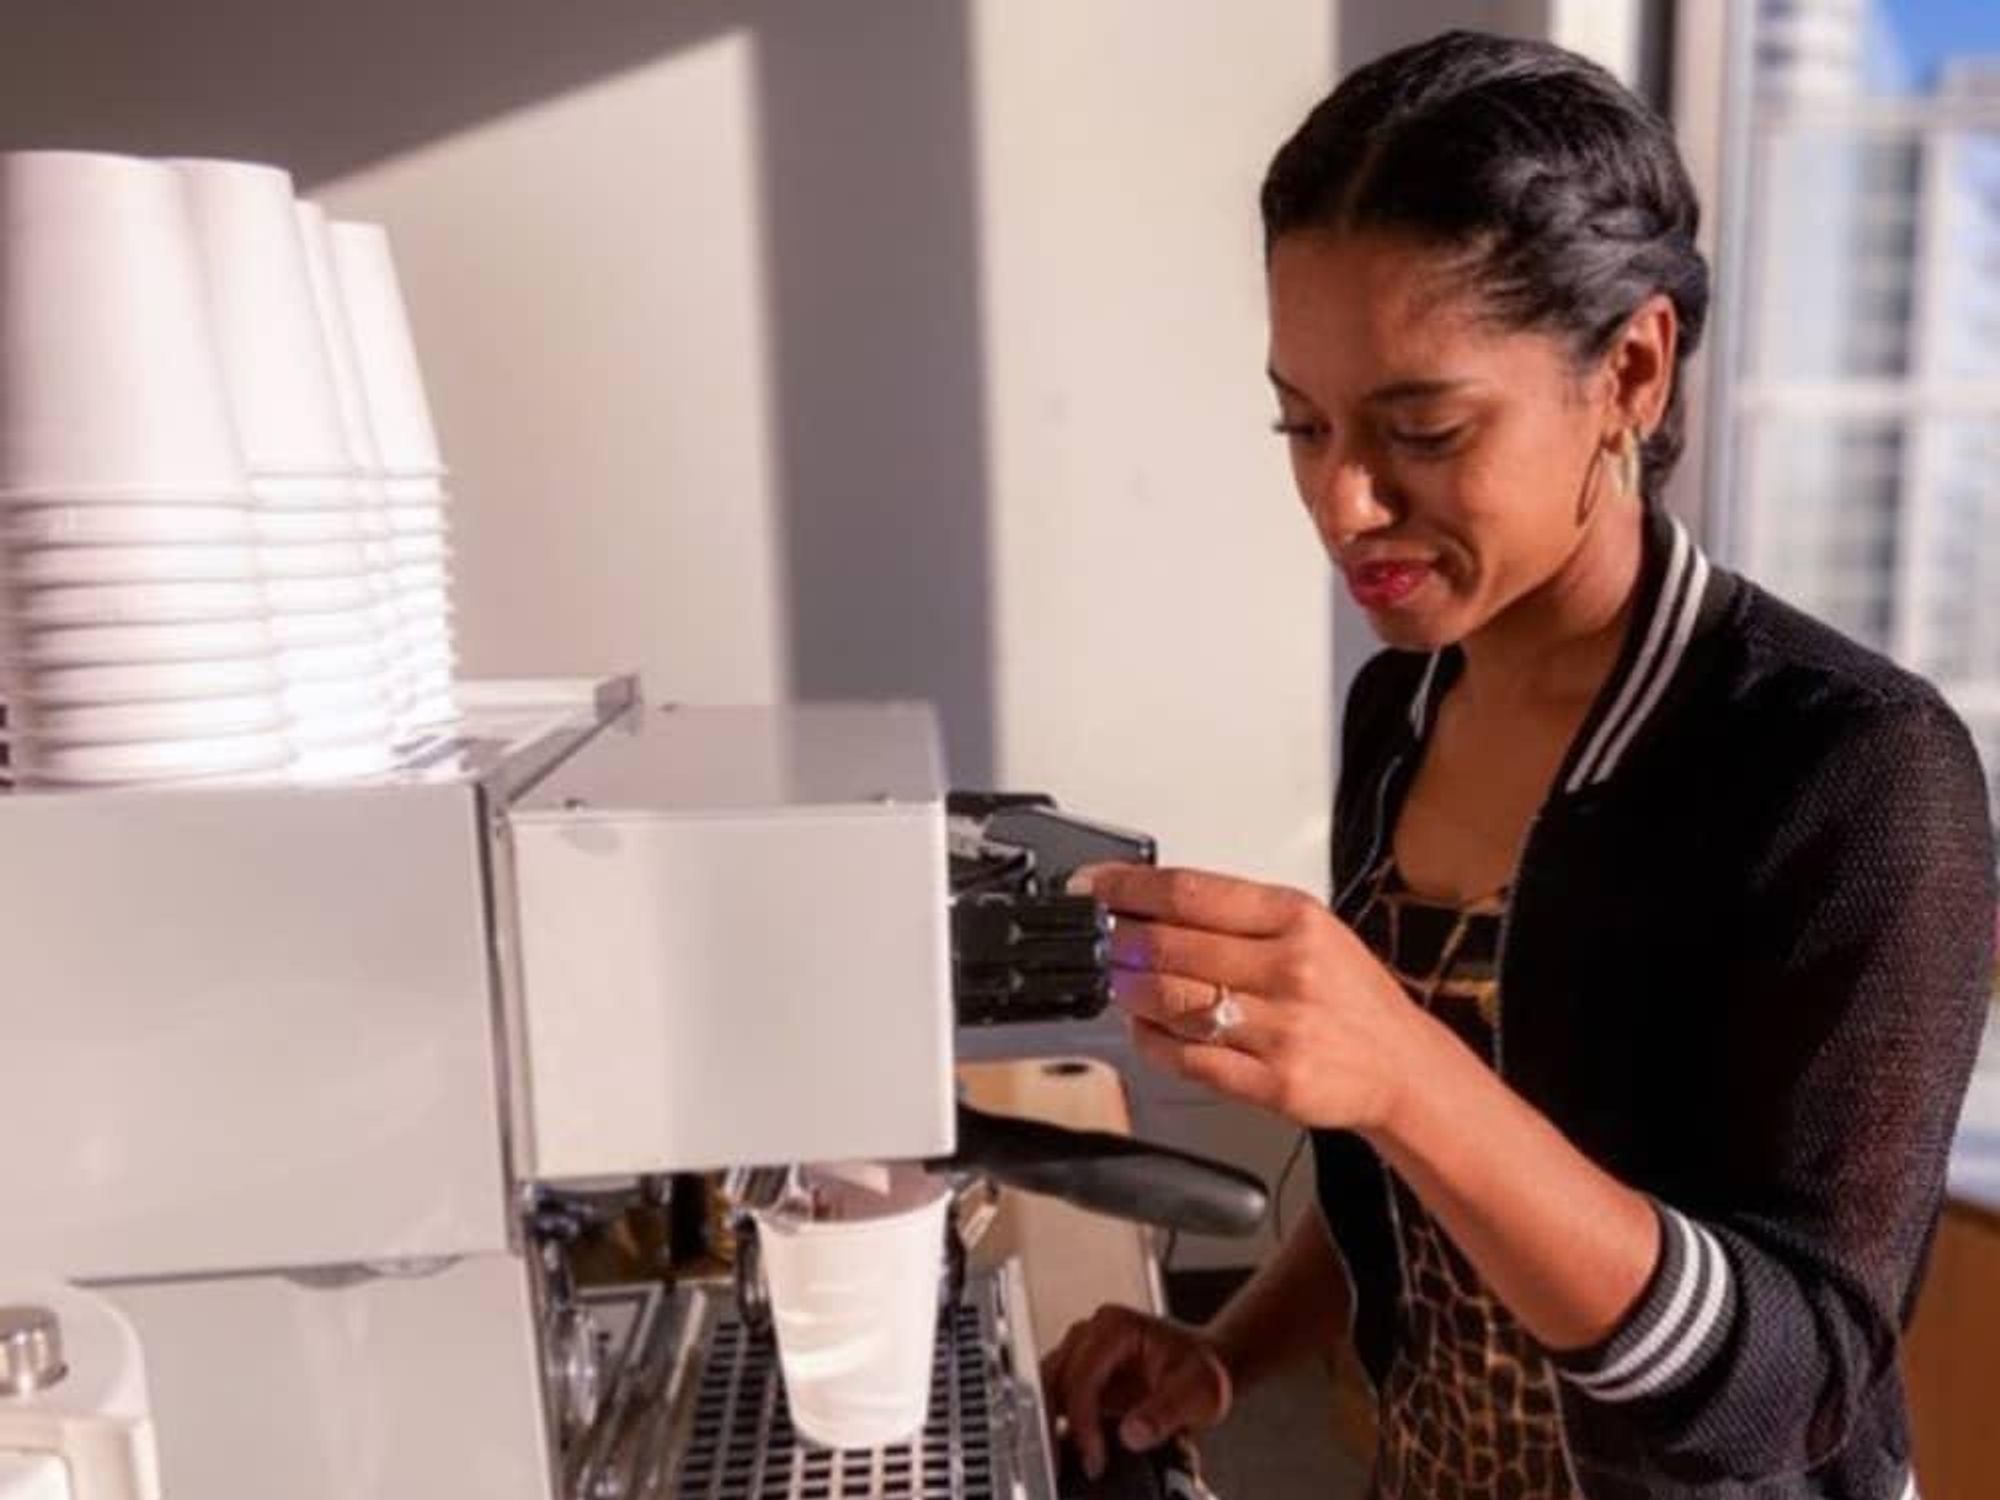 Coffee Maker, 100 cup - Uptown Rentals